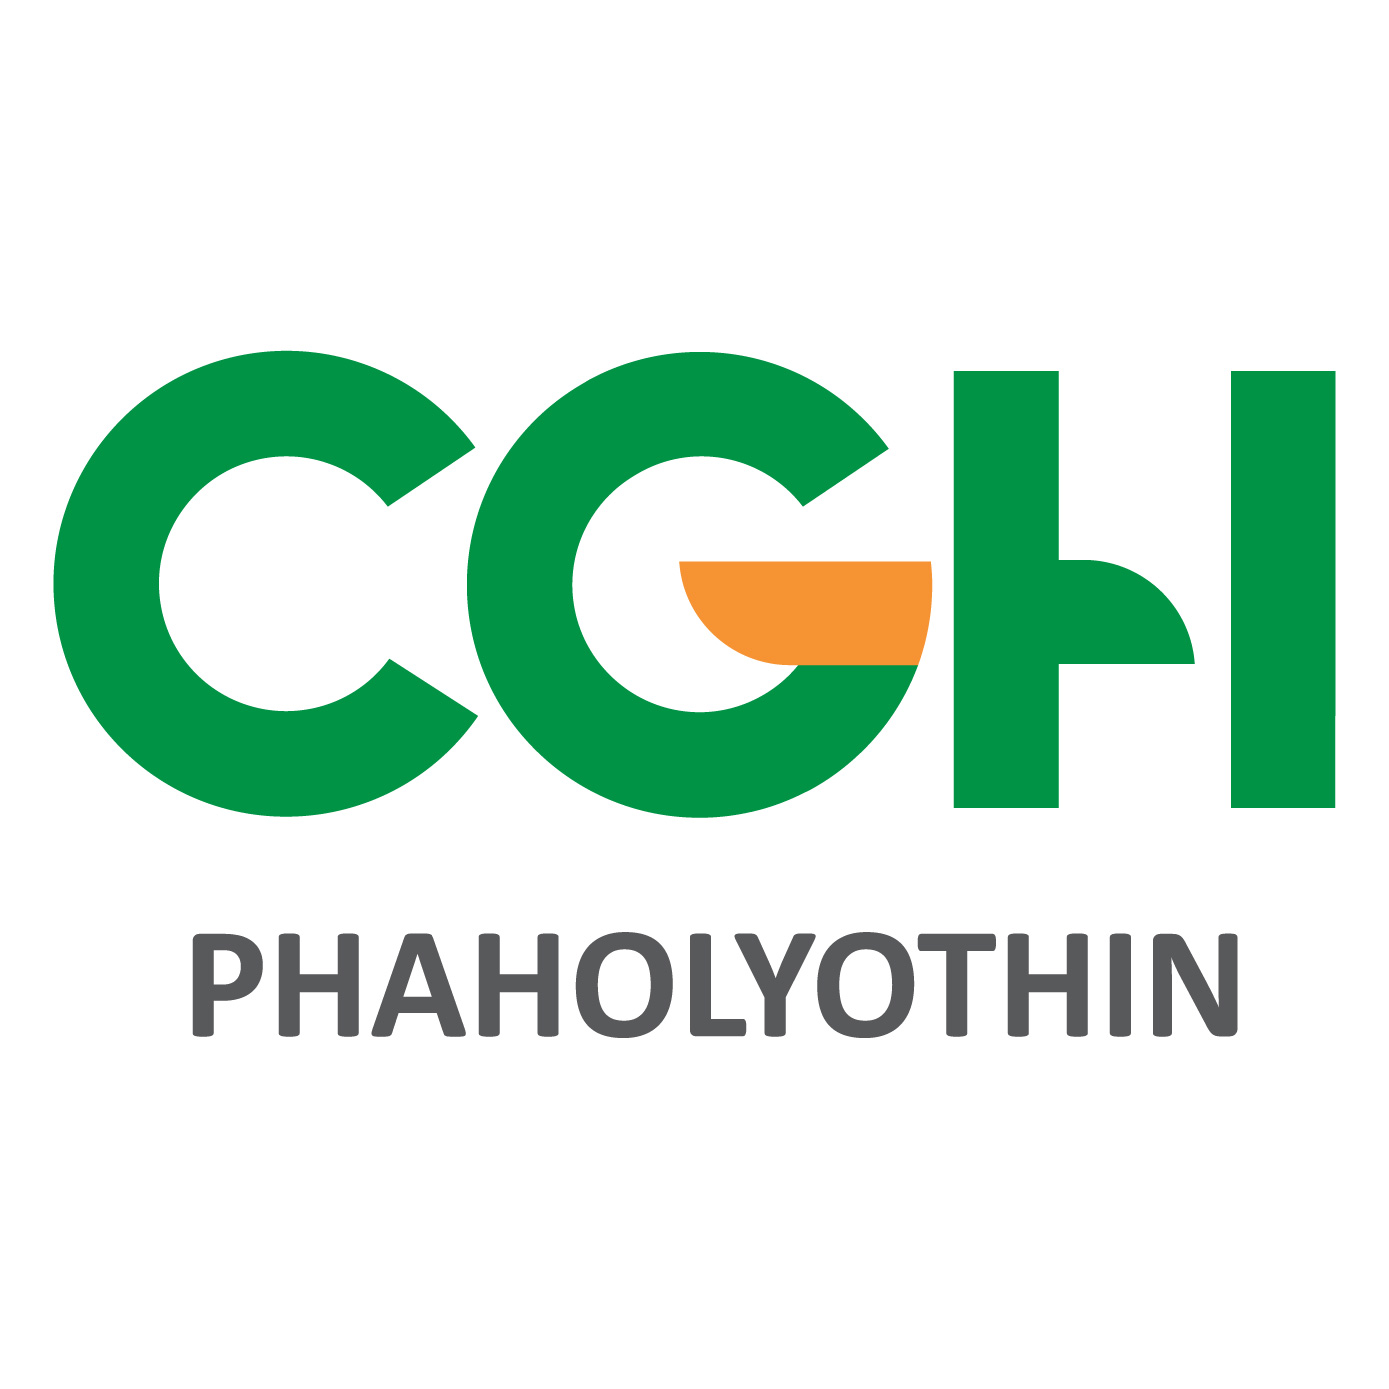 Cgh Hospital Phaholyothin 01